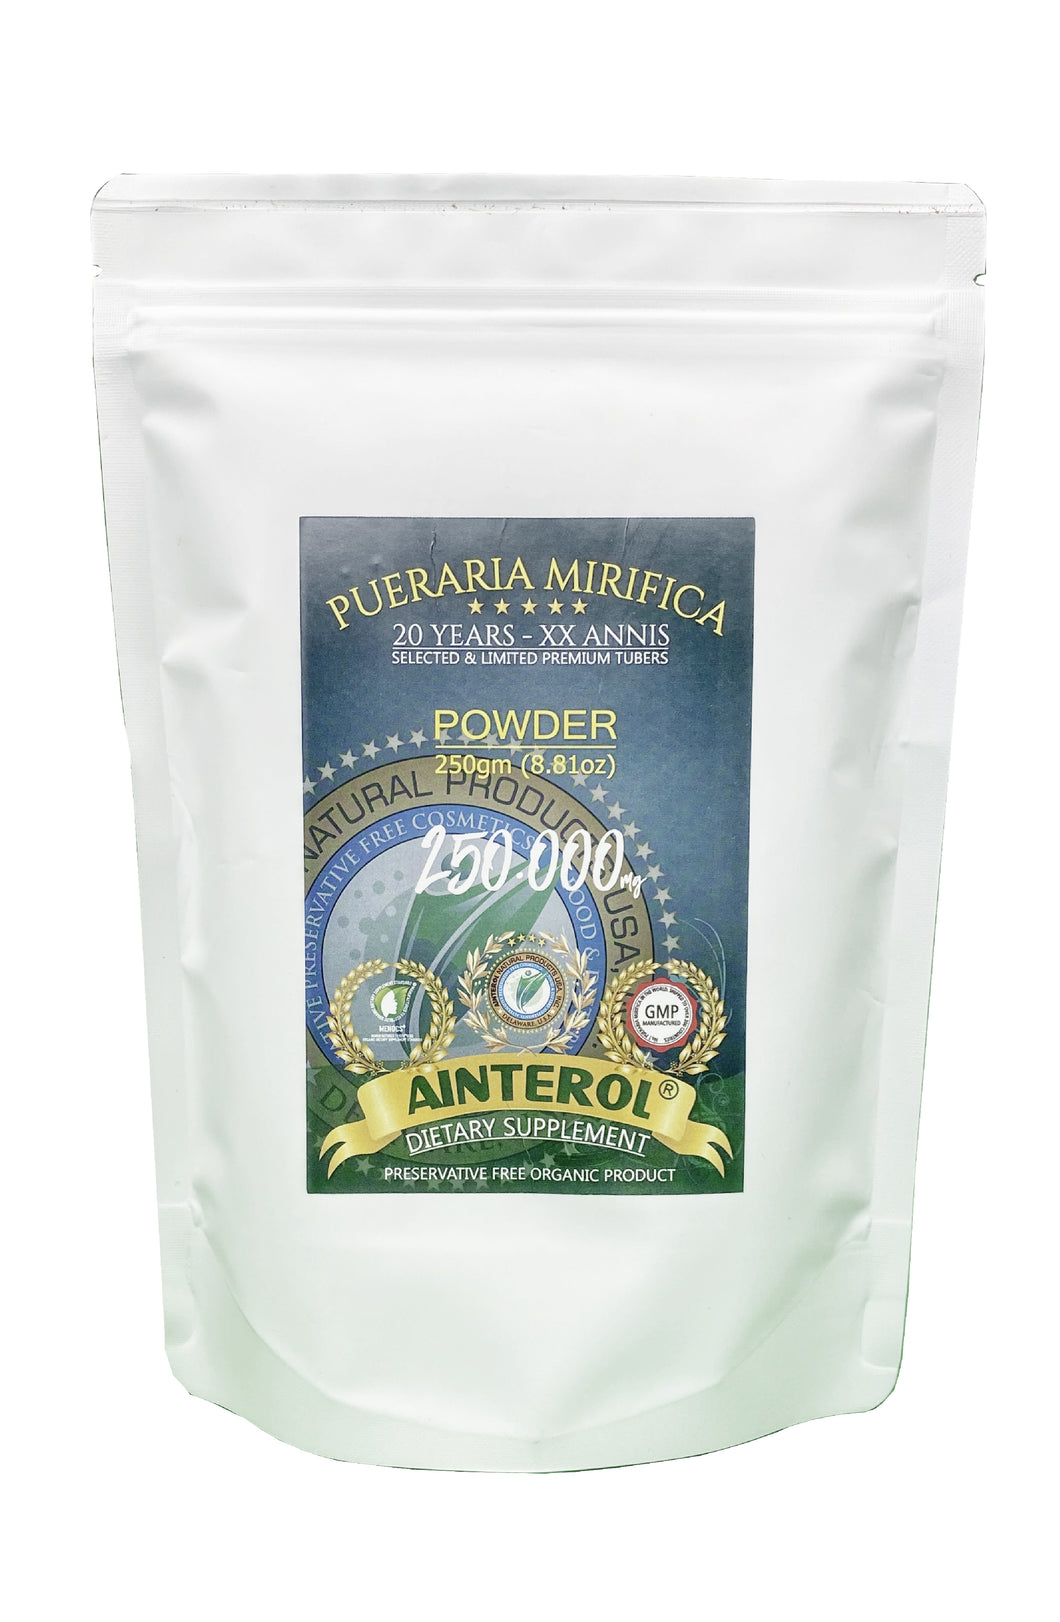 AINTEROL® Pueraria Mirifica Polvere - 250gm (8,81oz)